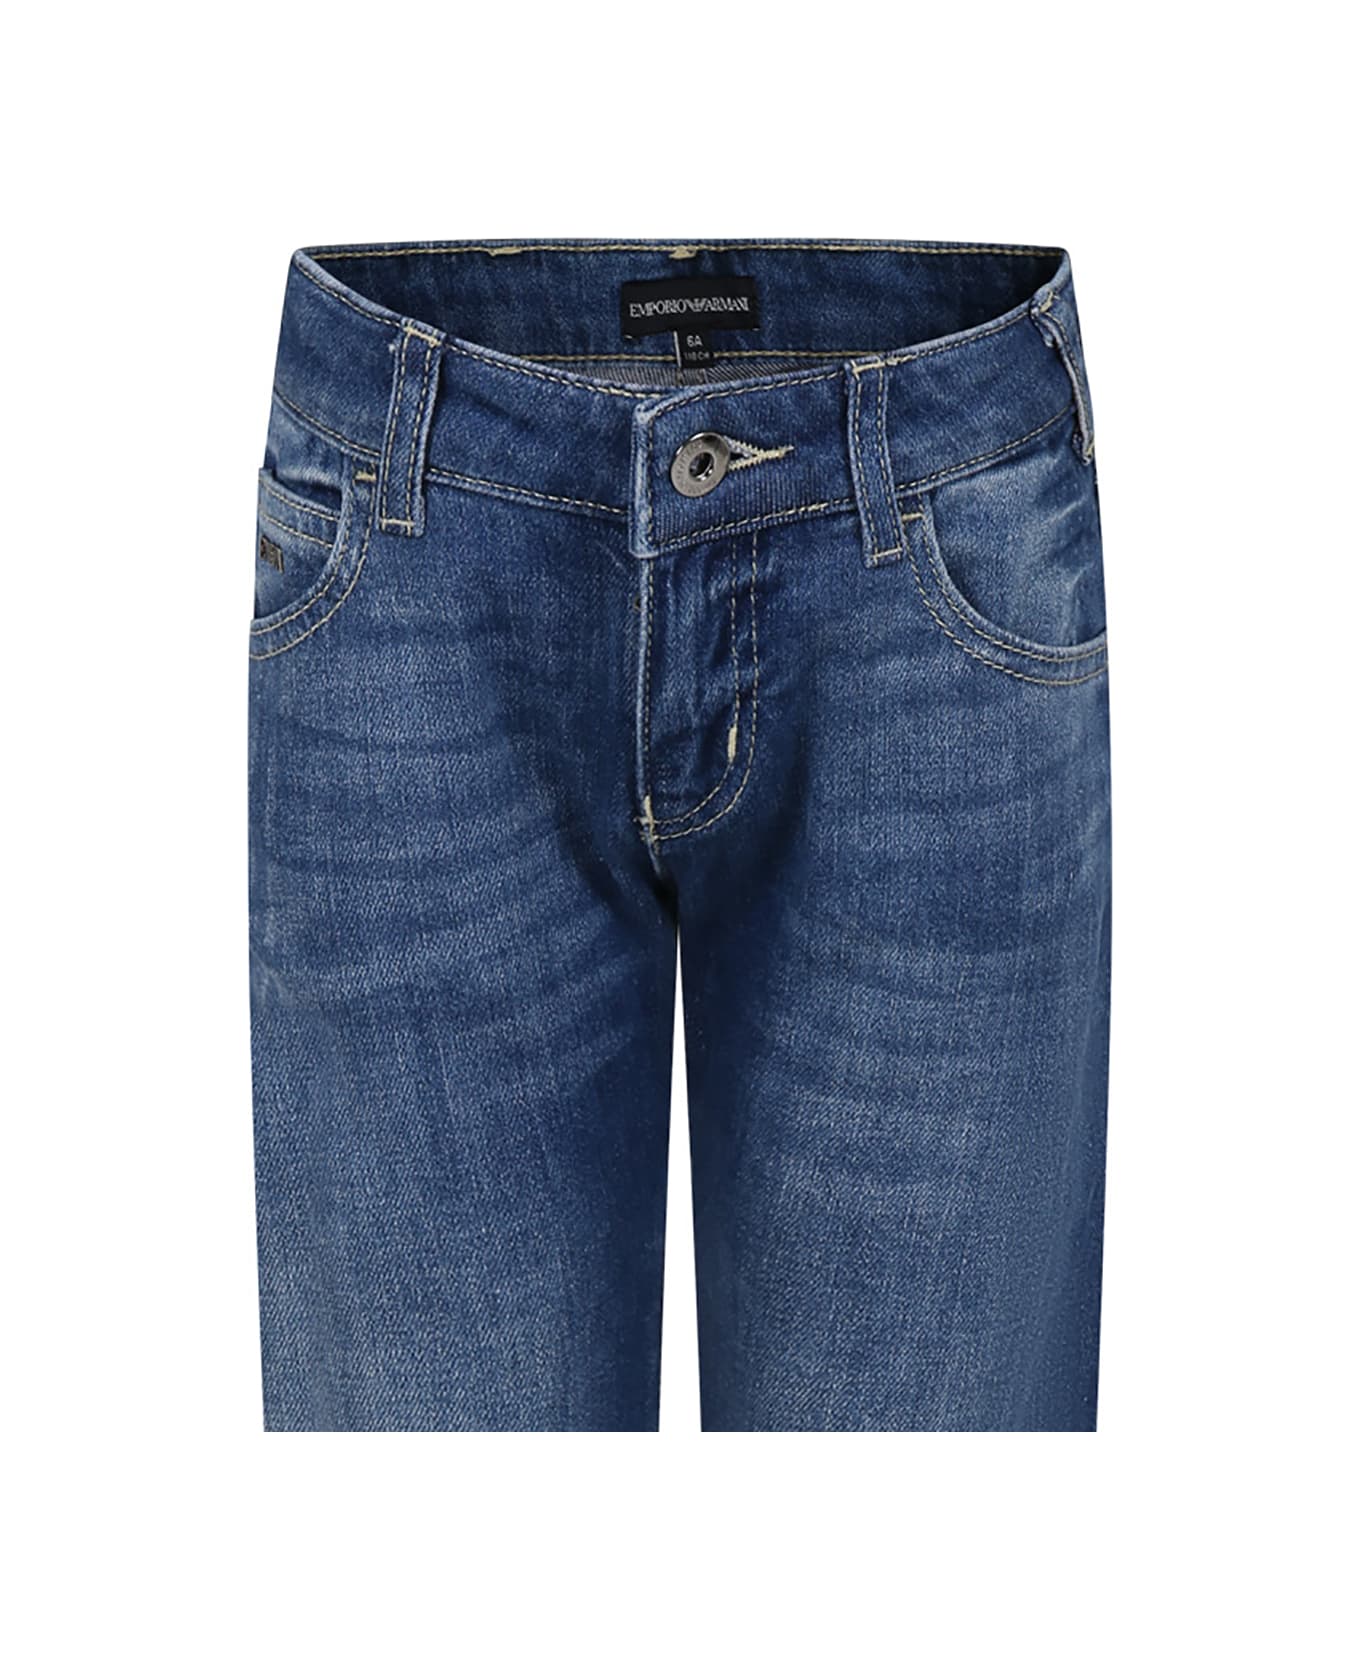 Emporio Armani Denim Jeans For Boy With Logo - DENIM BLUE